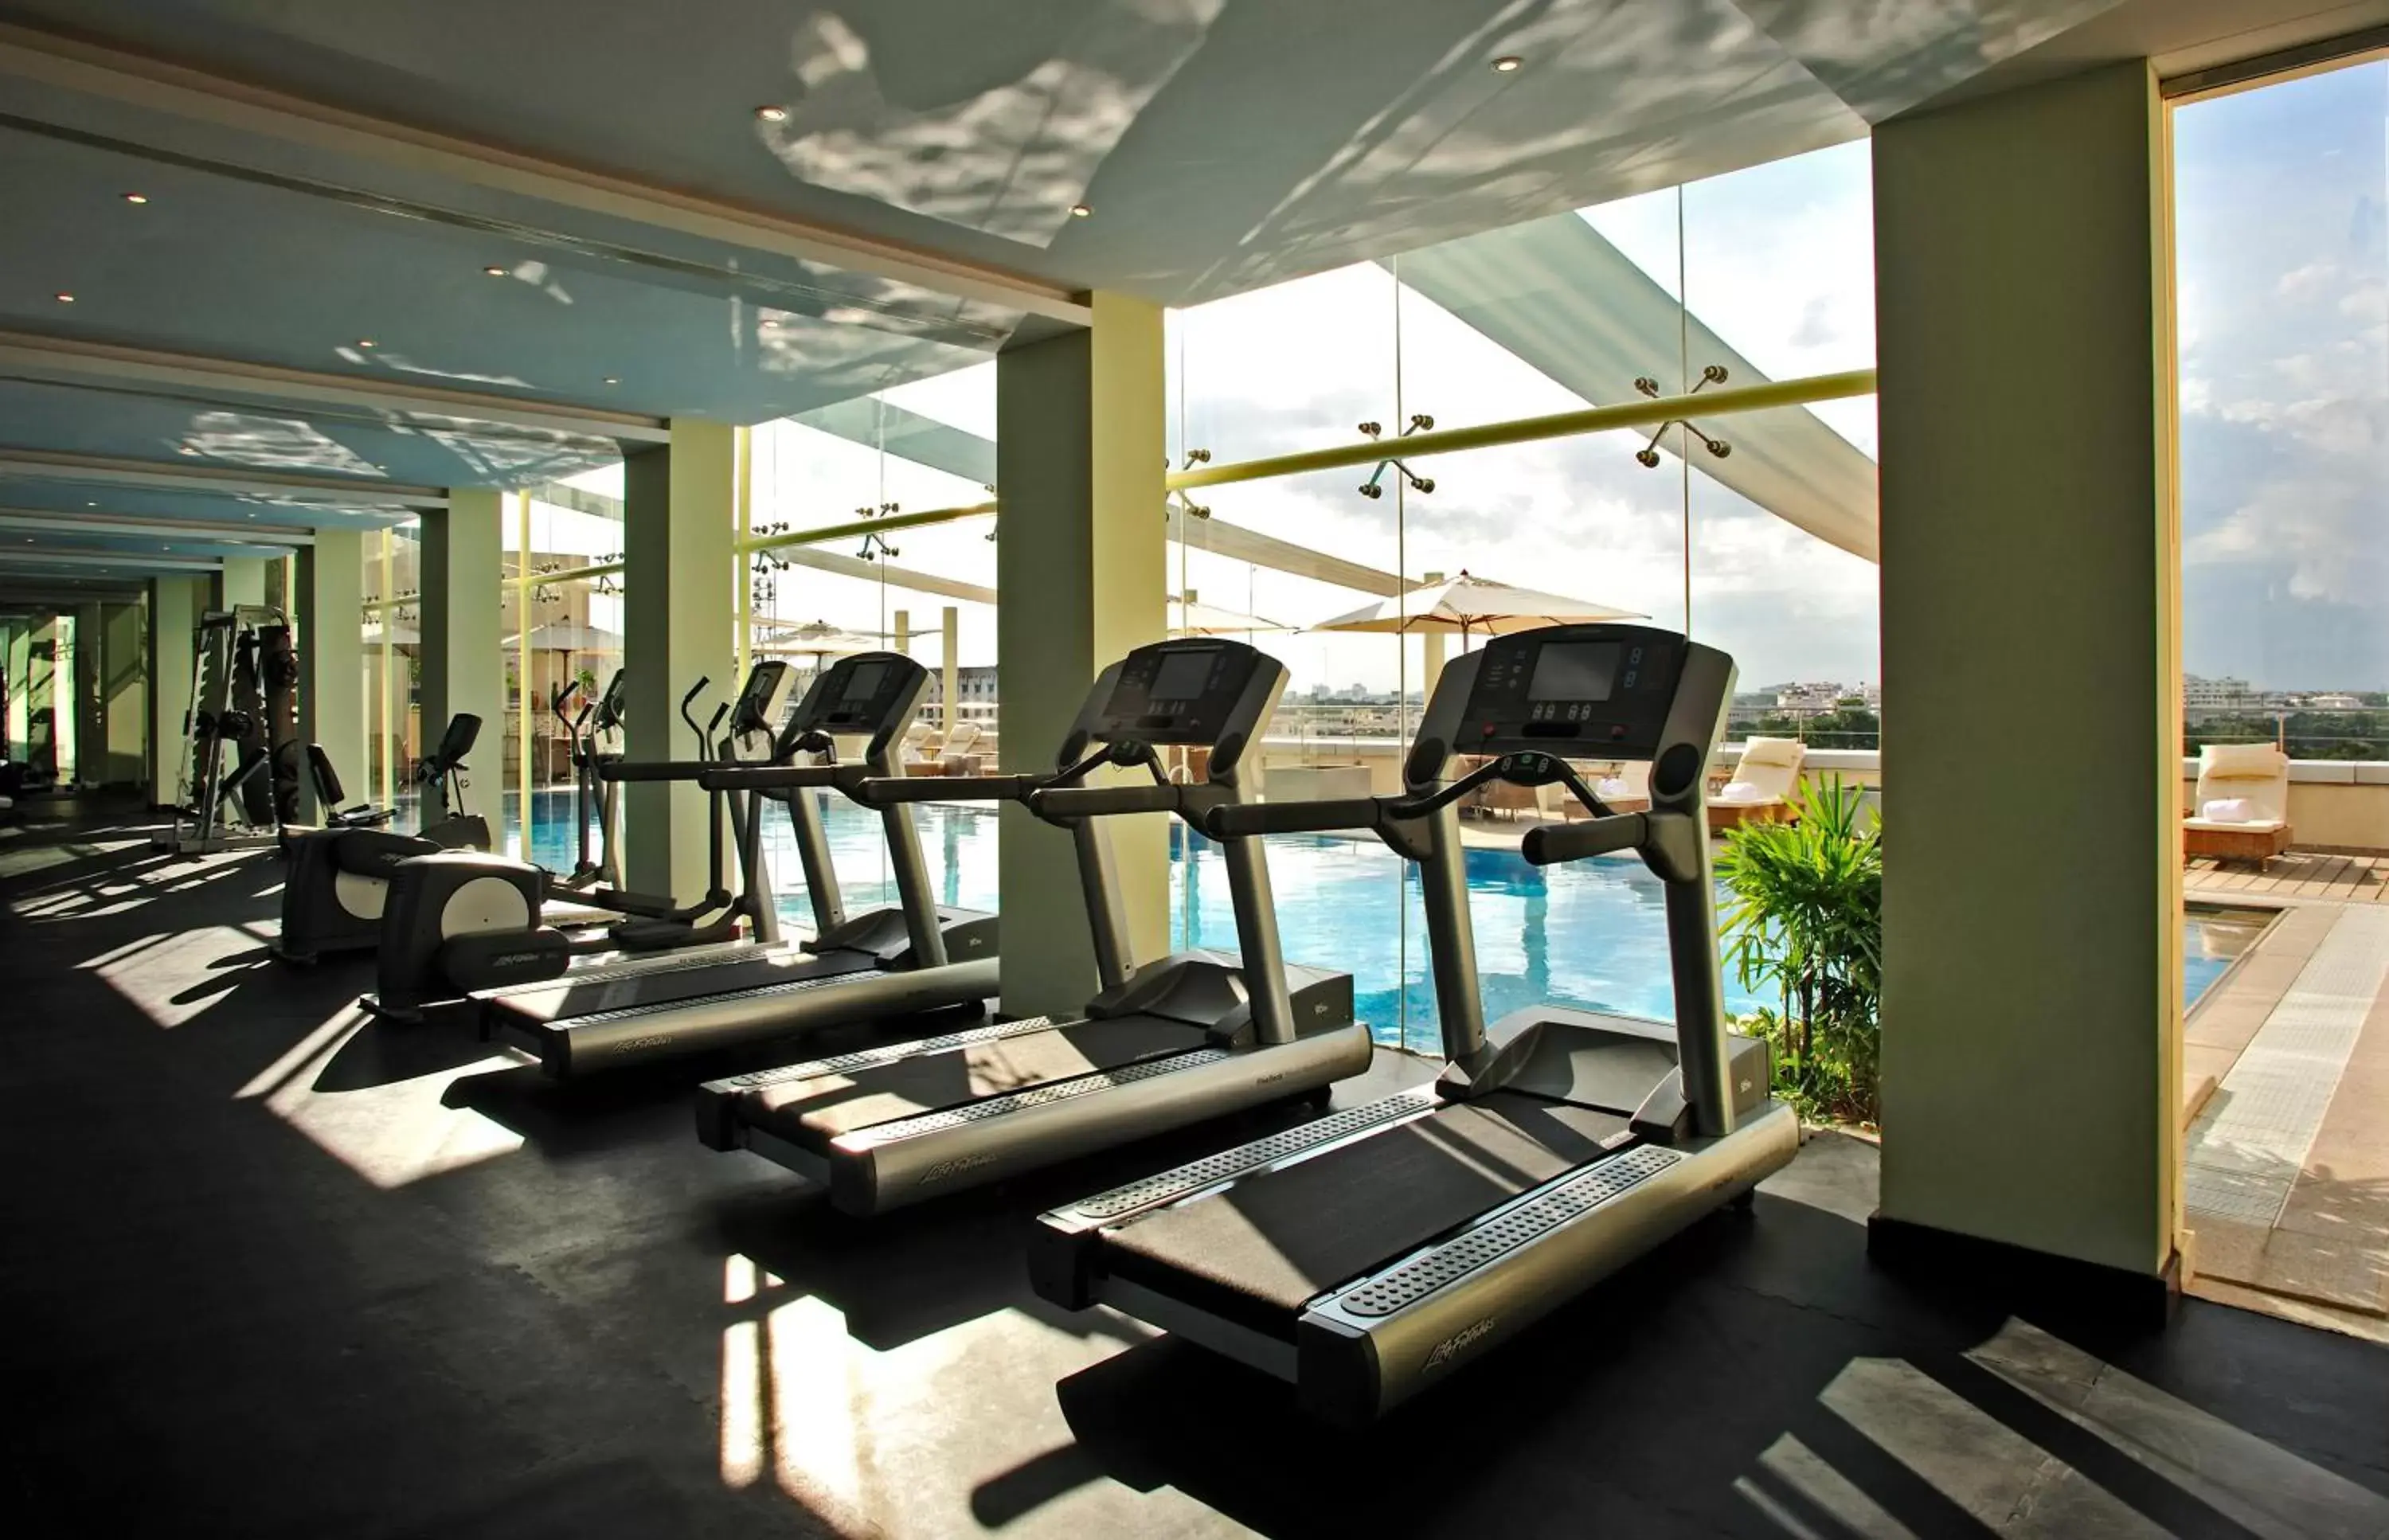 Fitness centre/facilities, Fitness Center/Facilities in Taj Club House